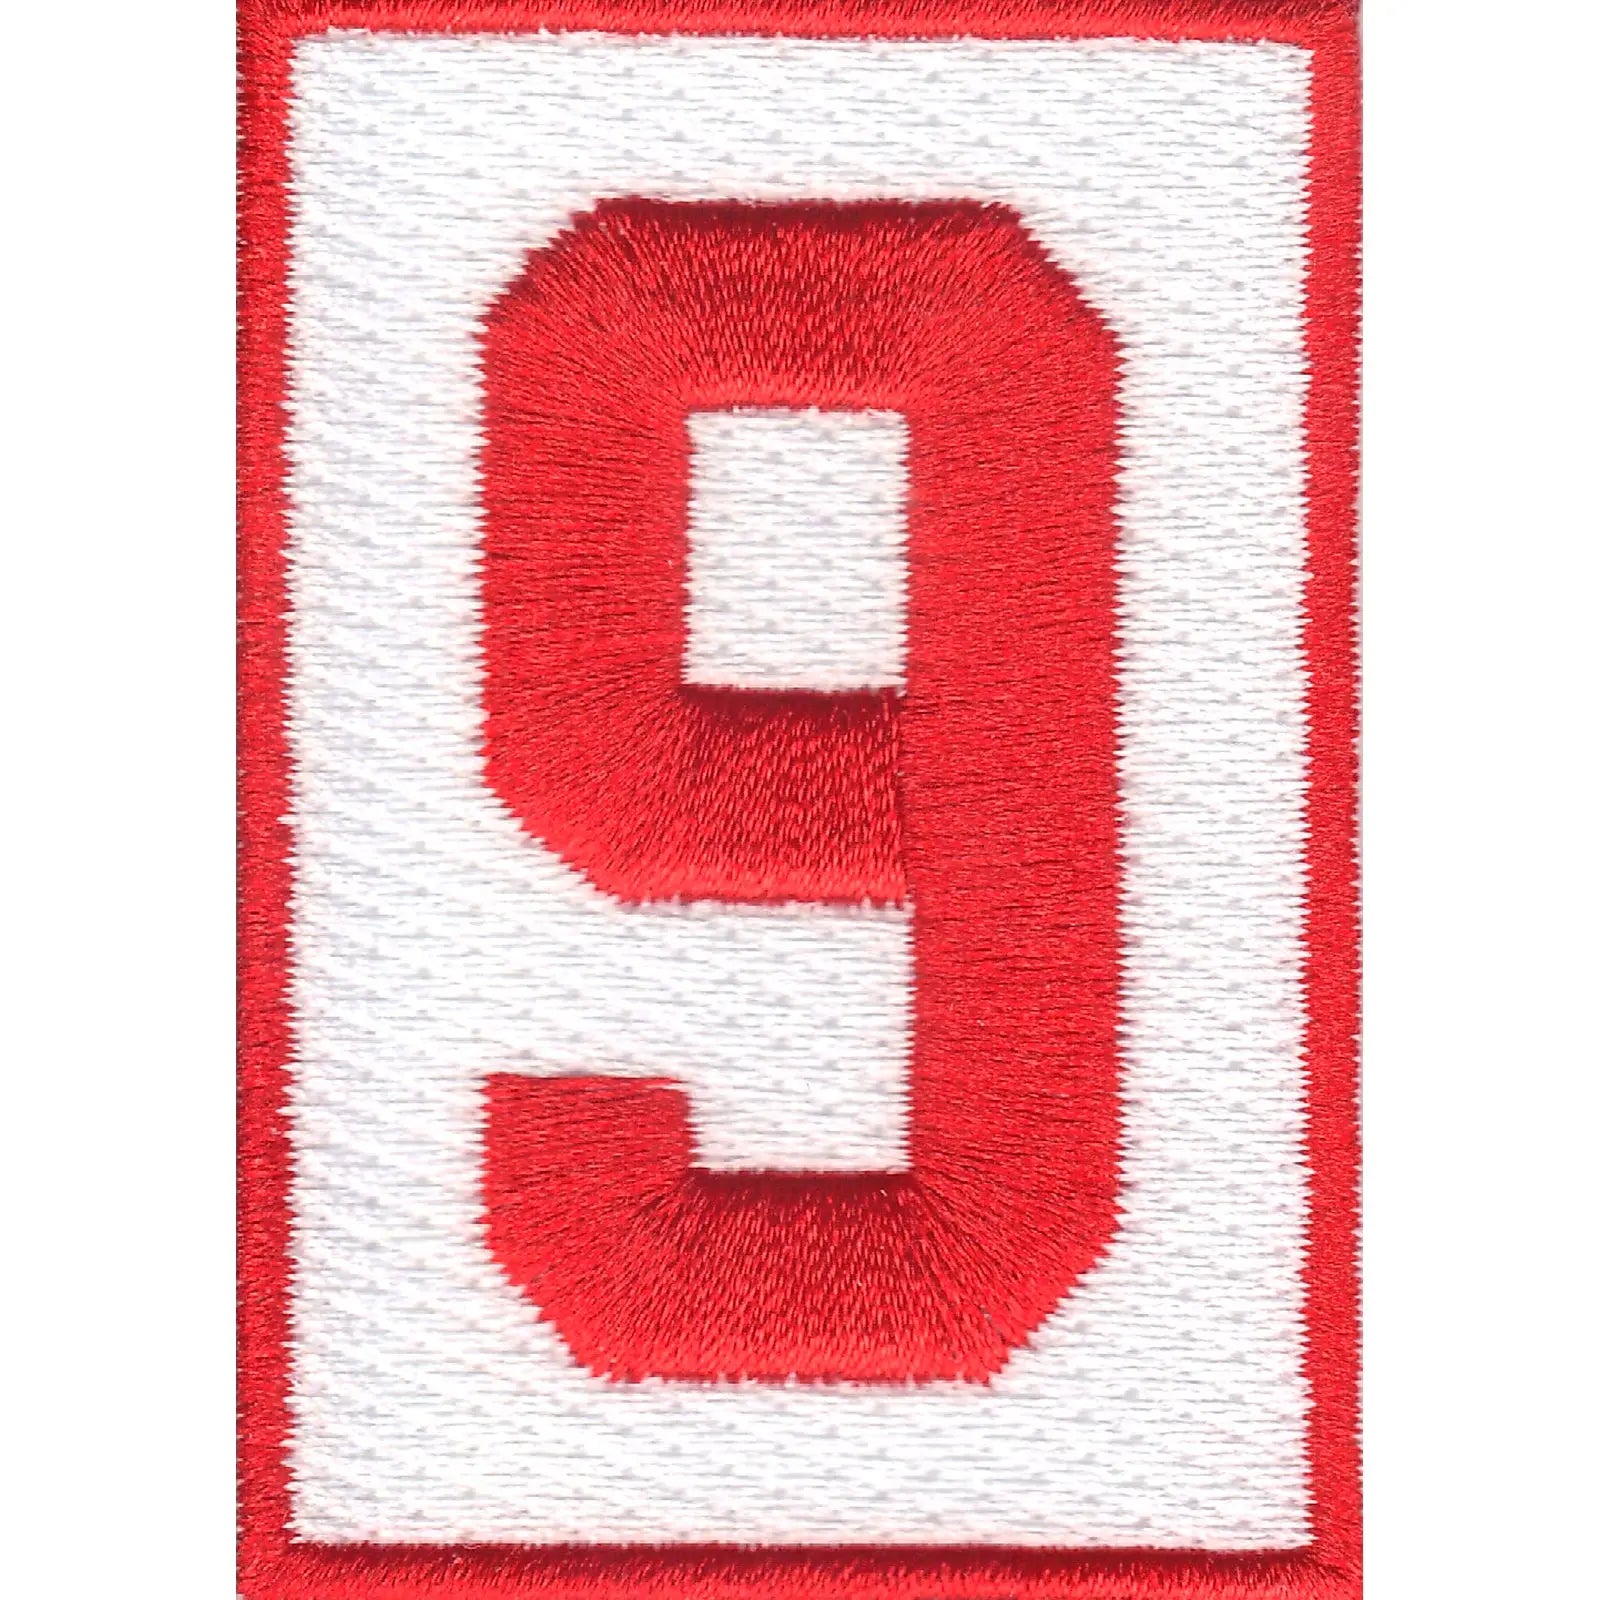 Gordie Howe #9 Memorial Jersey Patch (White) 